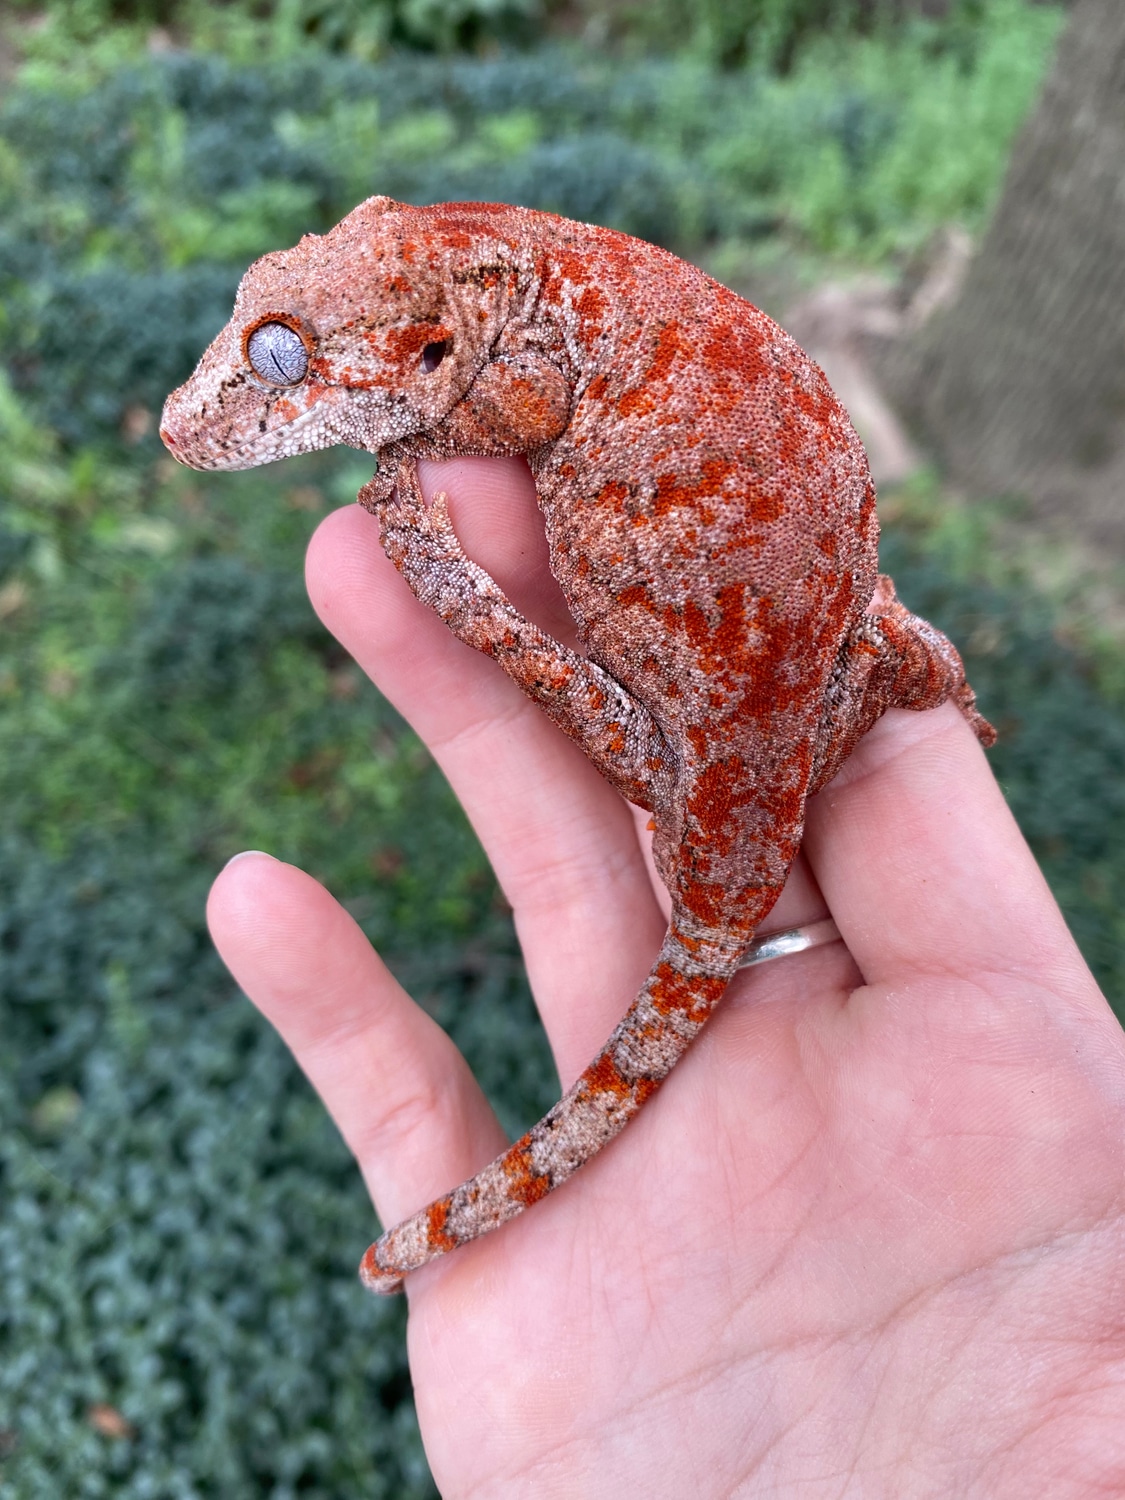 Red Superblotch Gargoyle Gecko by Cosmic Exotics